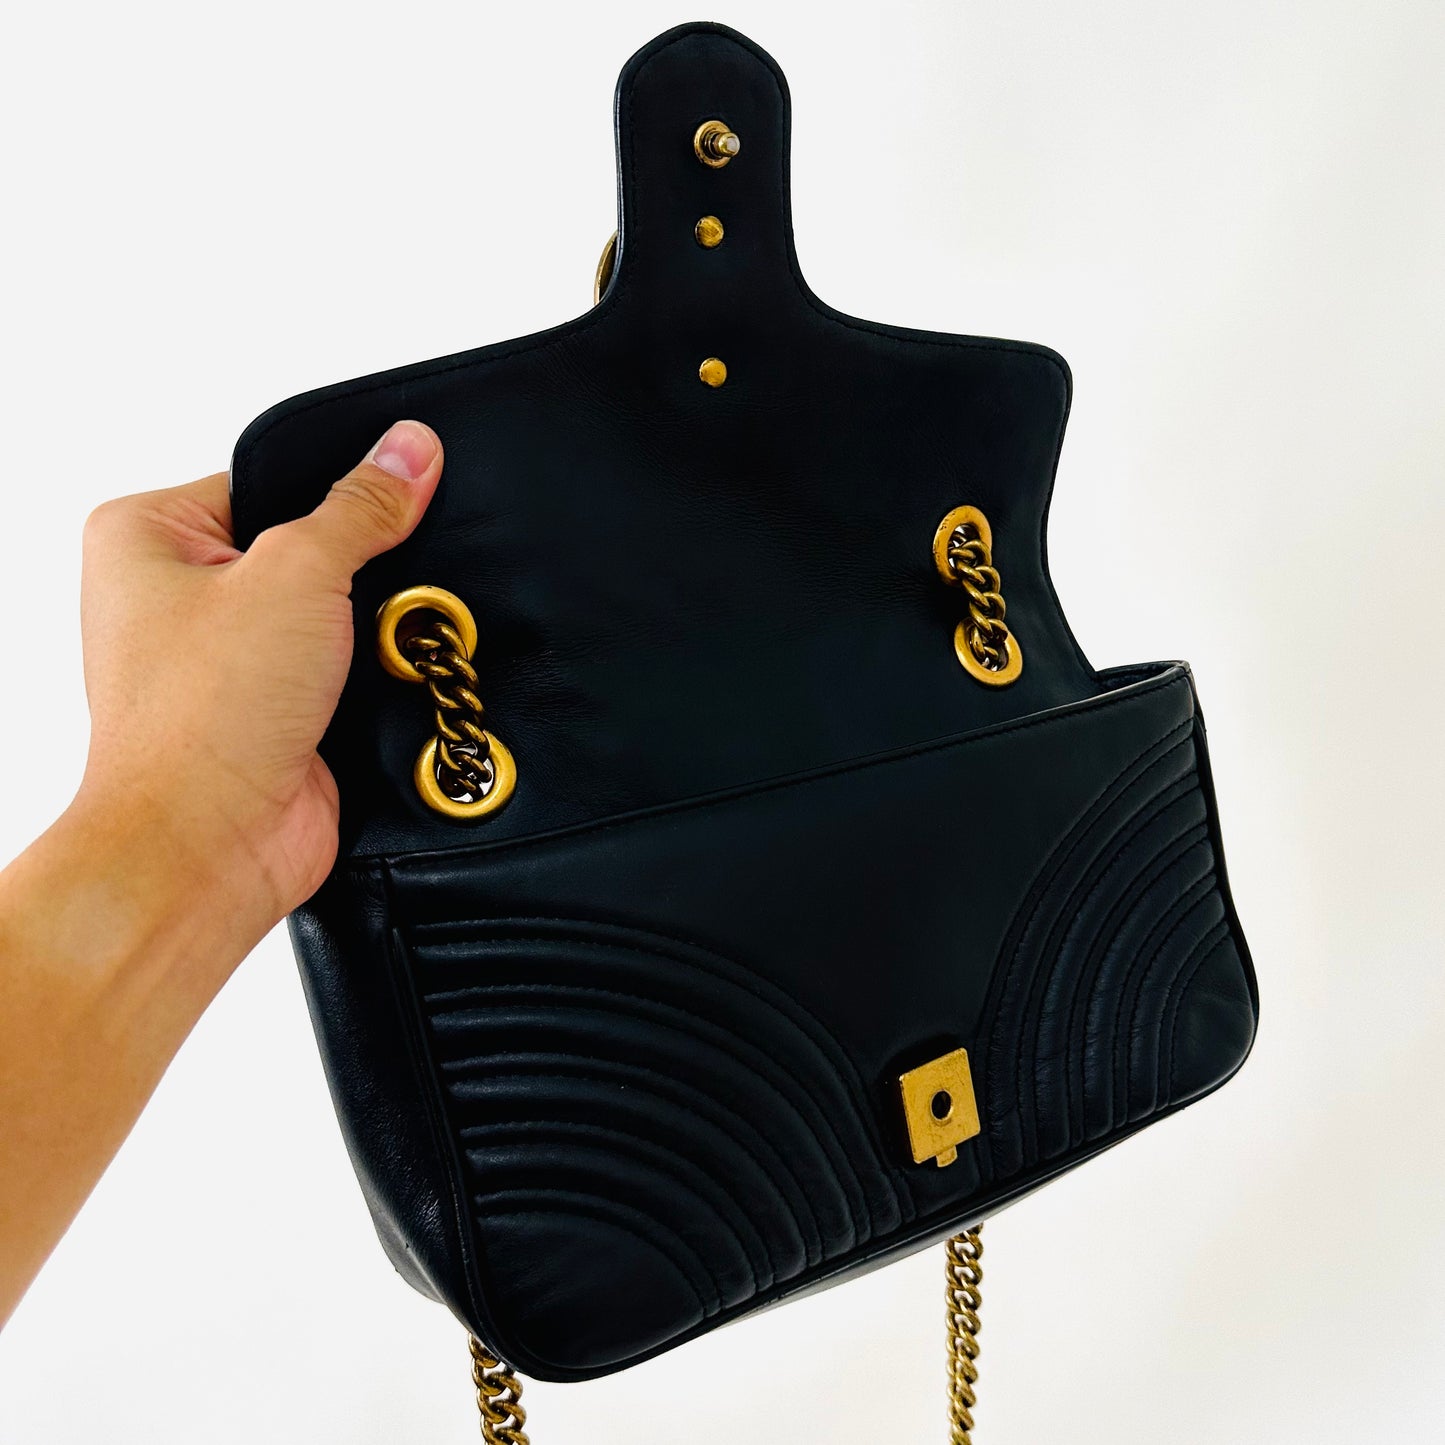 Gucci Marmont GG Monogram Logo Black GHW Leather Small Flap Shoulder Sling Bag